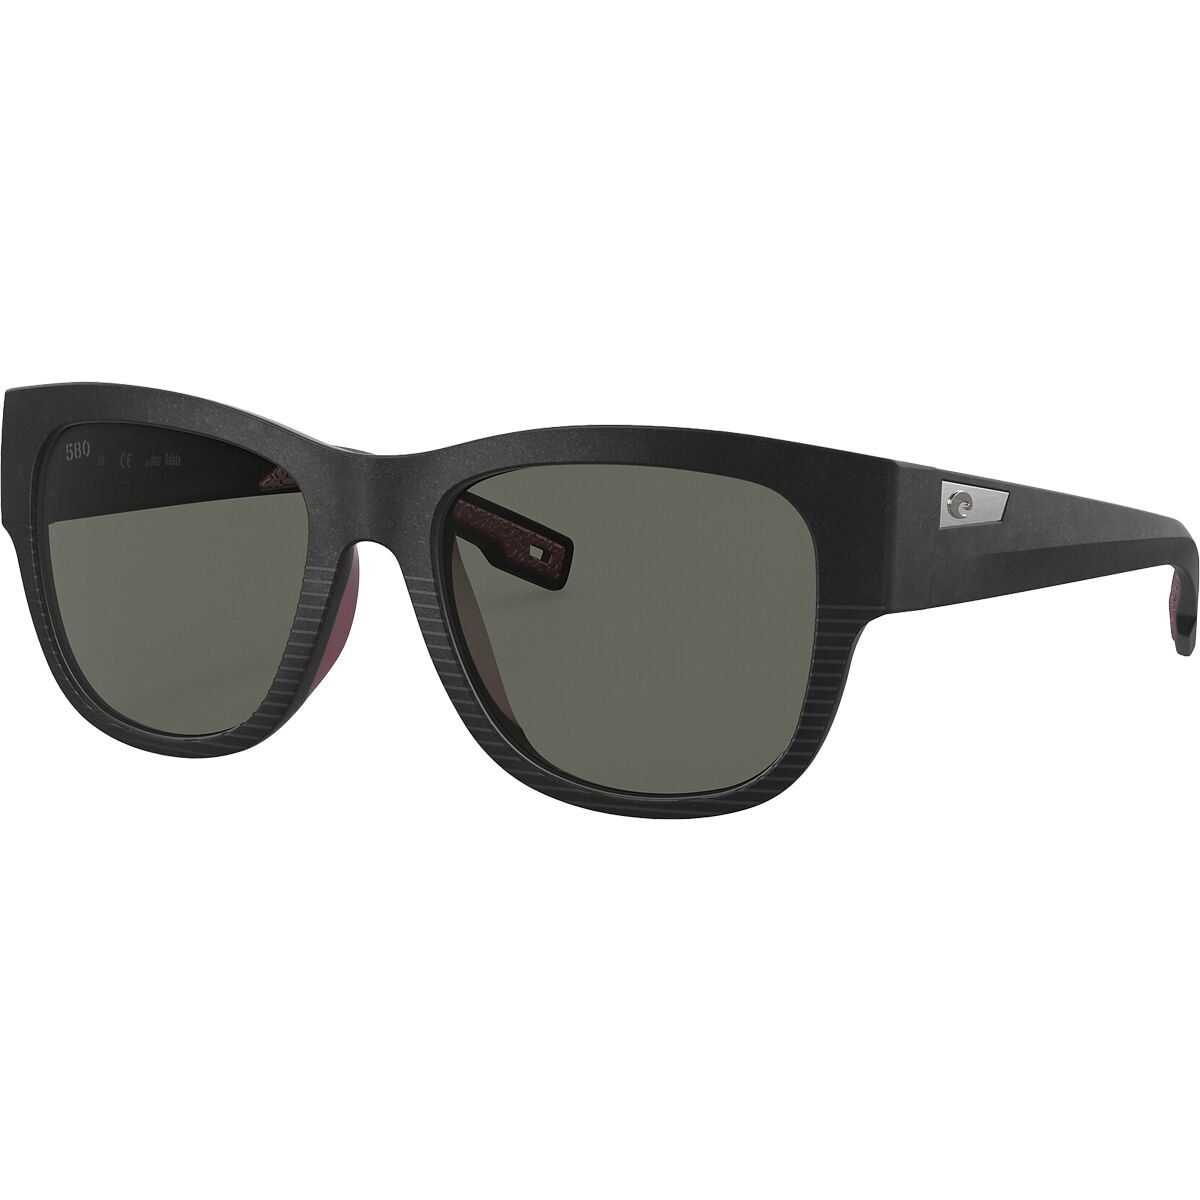 Costa Caleta Net 580G Polarized Sunglasses - Women's